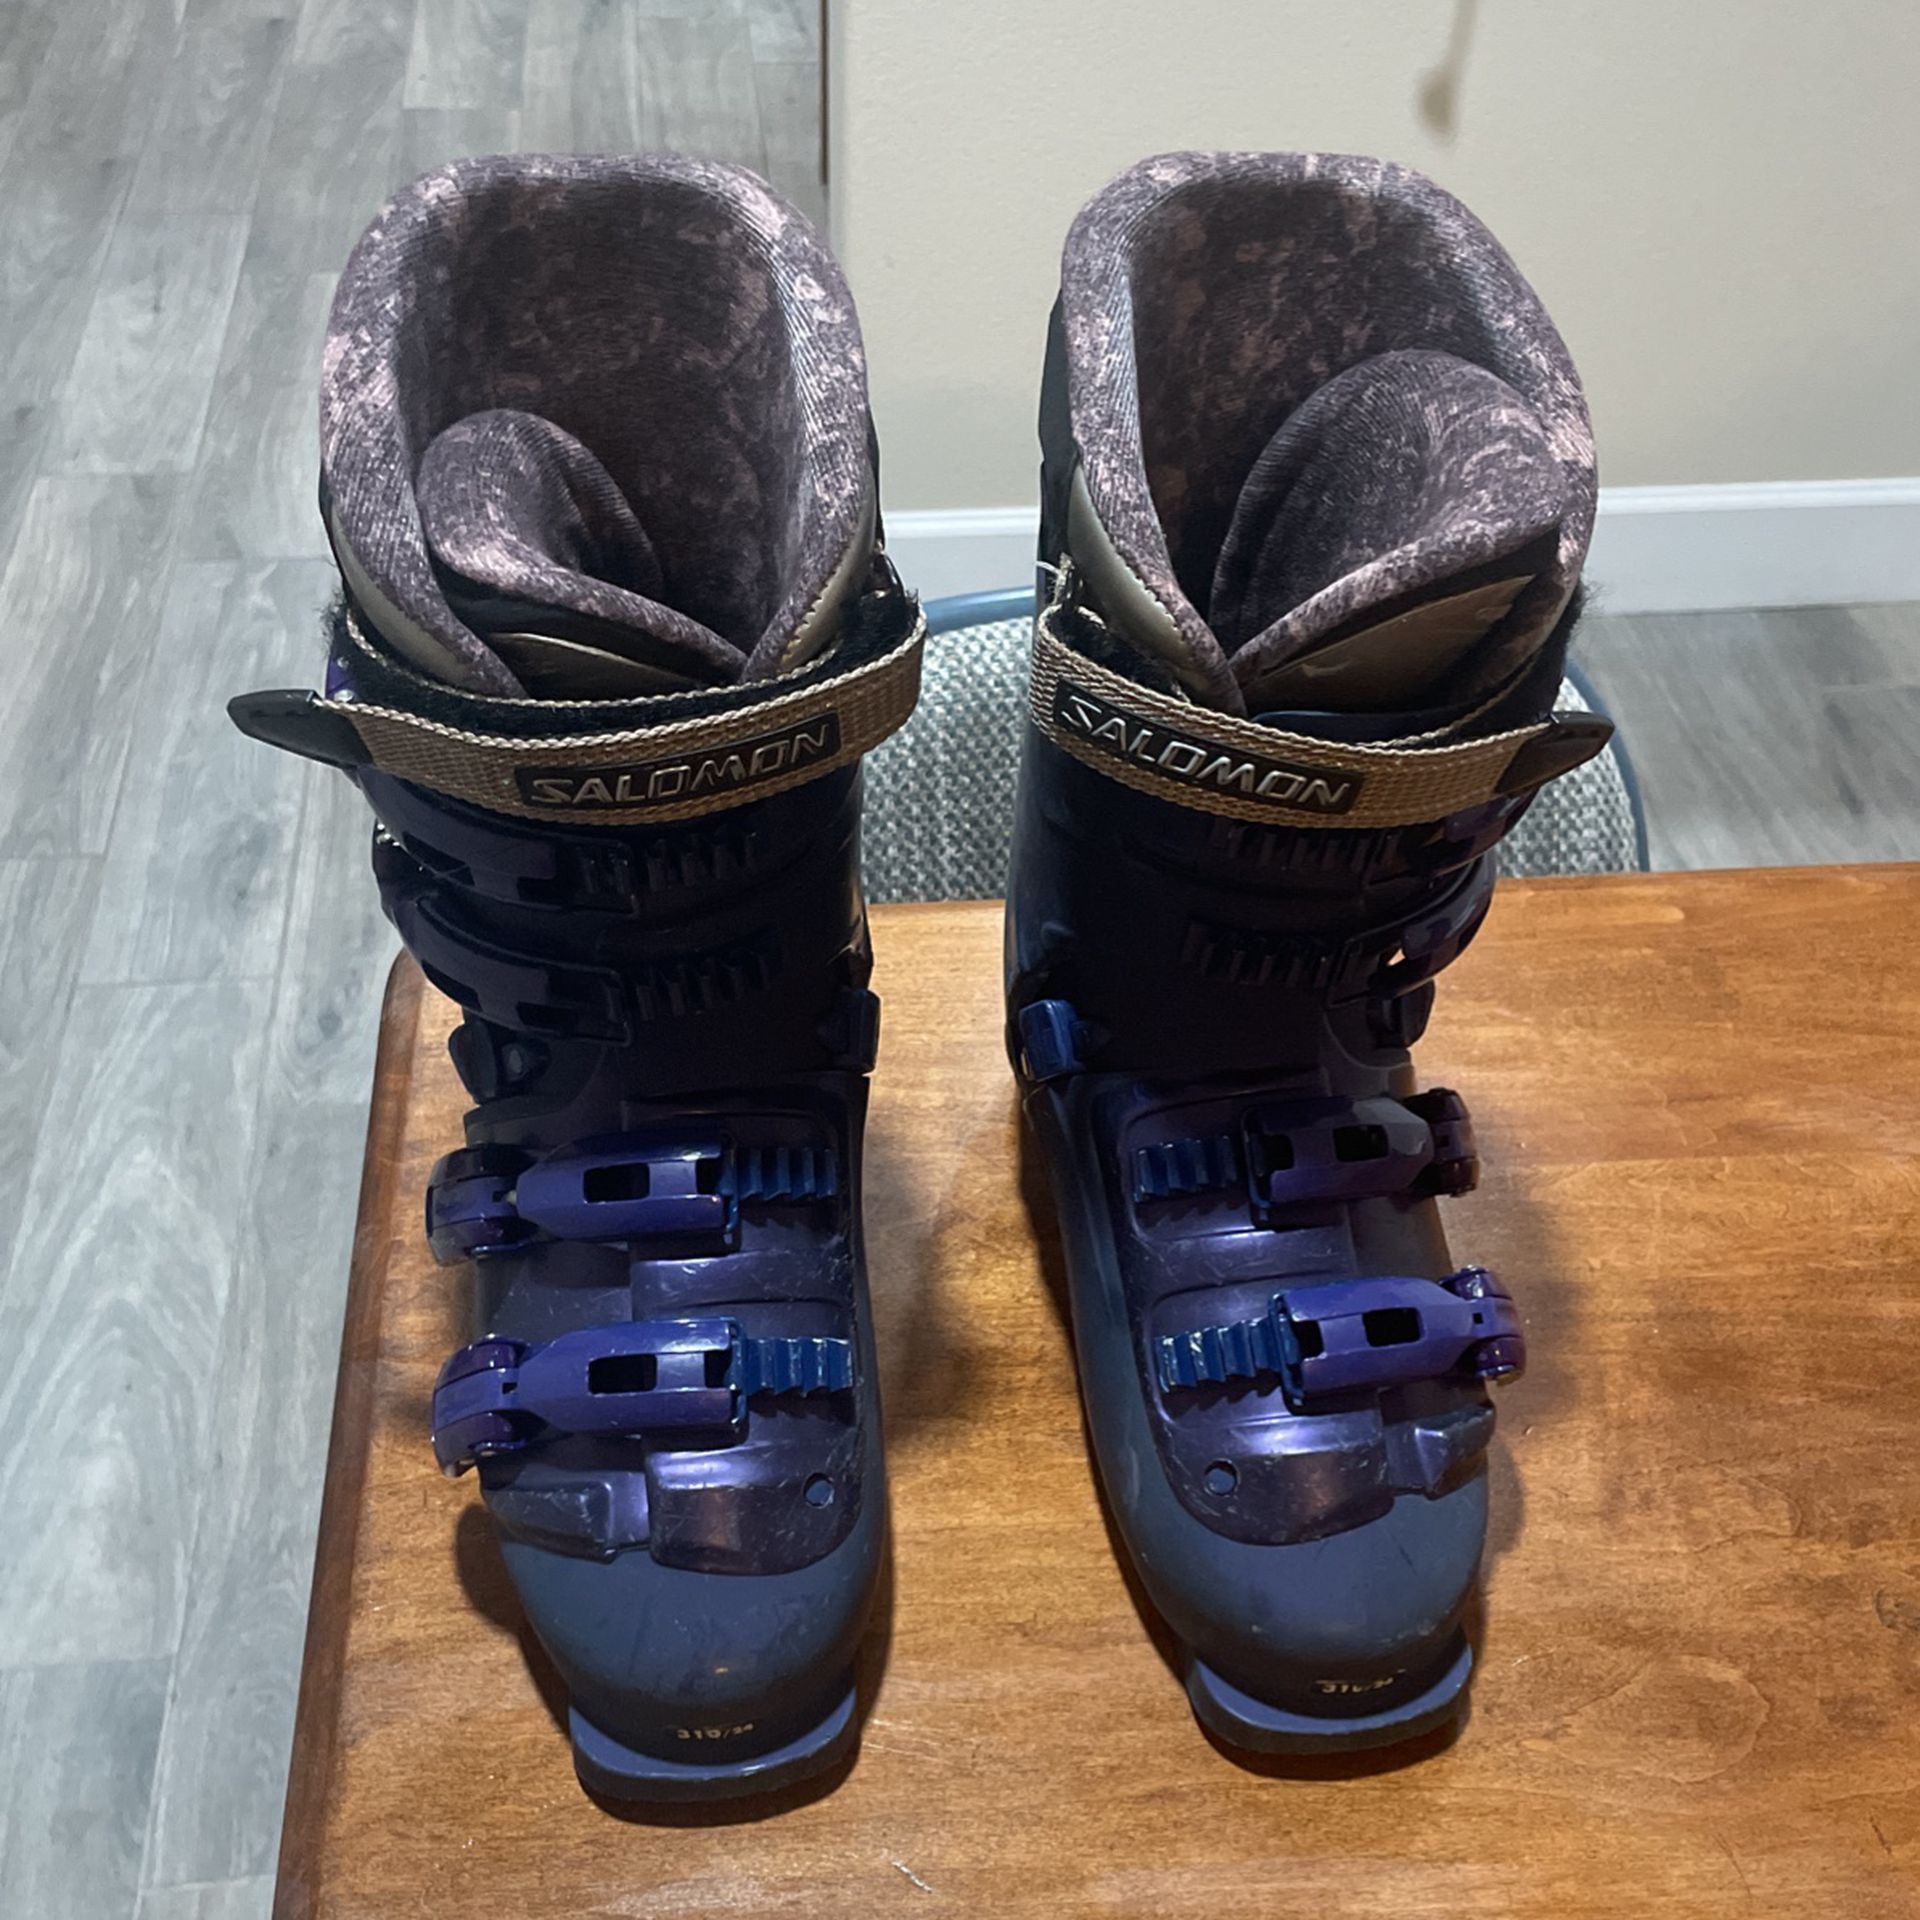 Ladies Salomon Ski Boots